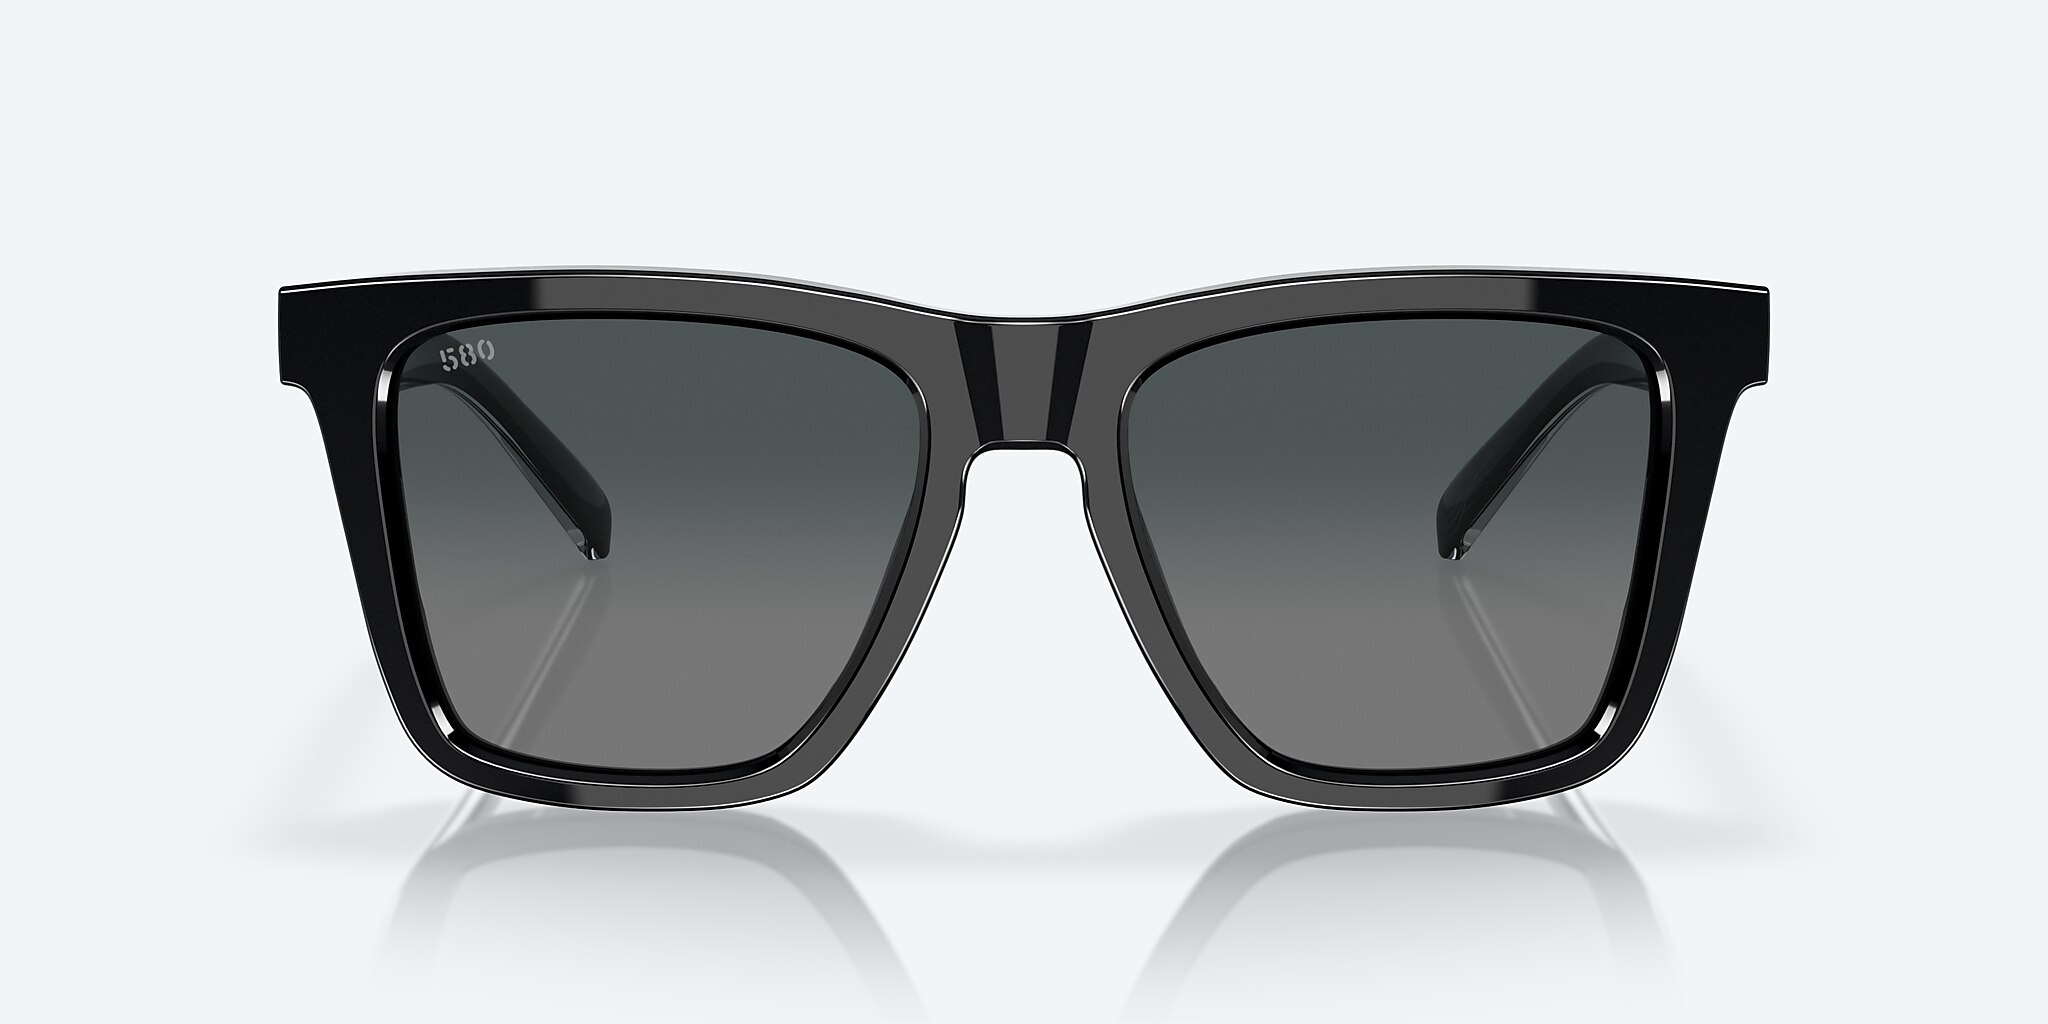 Costa Del Mar Keramas Sunglasses, Black / Gray Gradient 580G